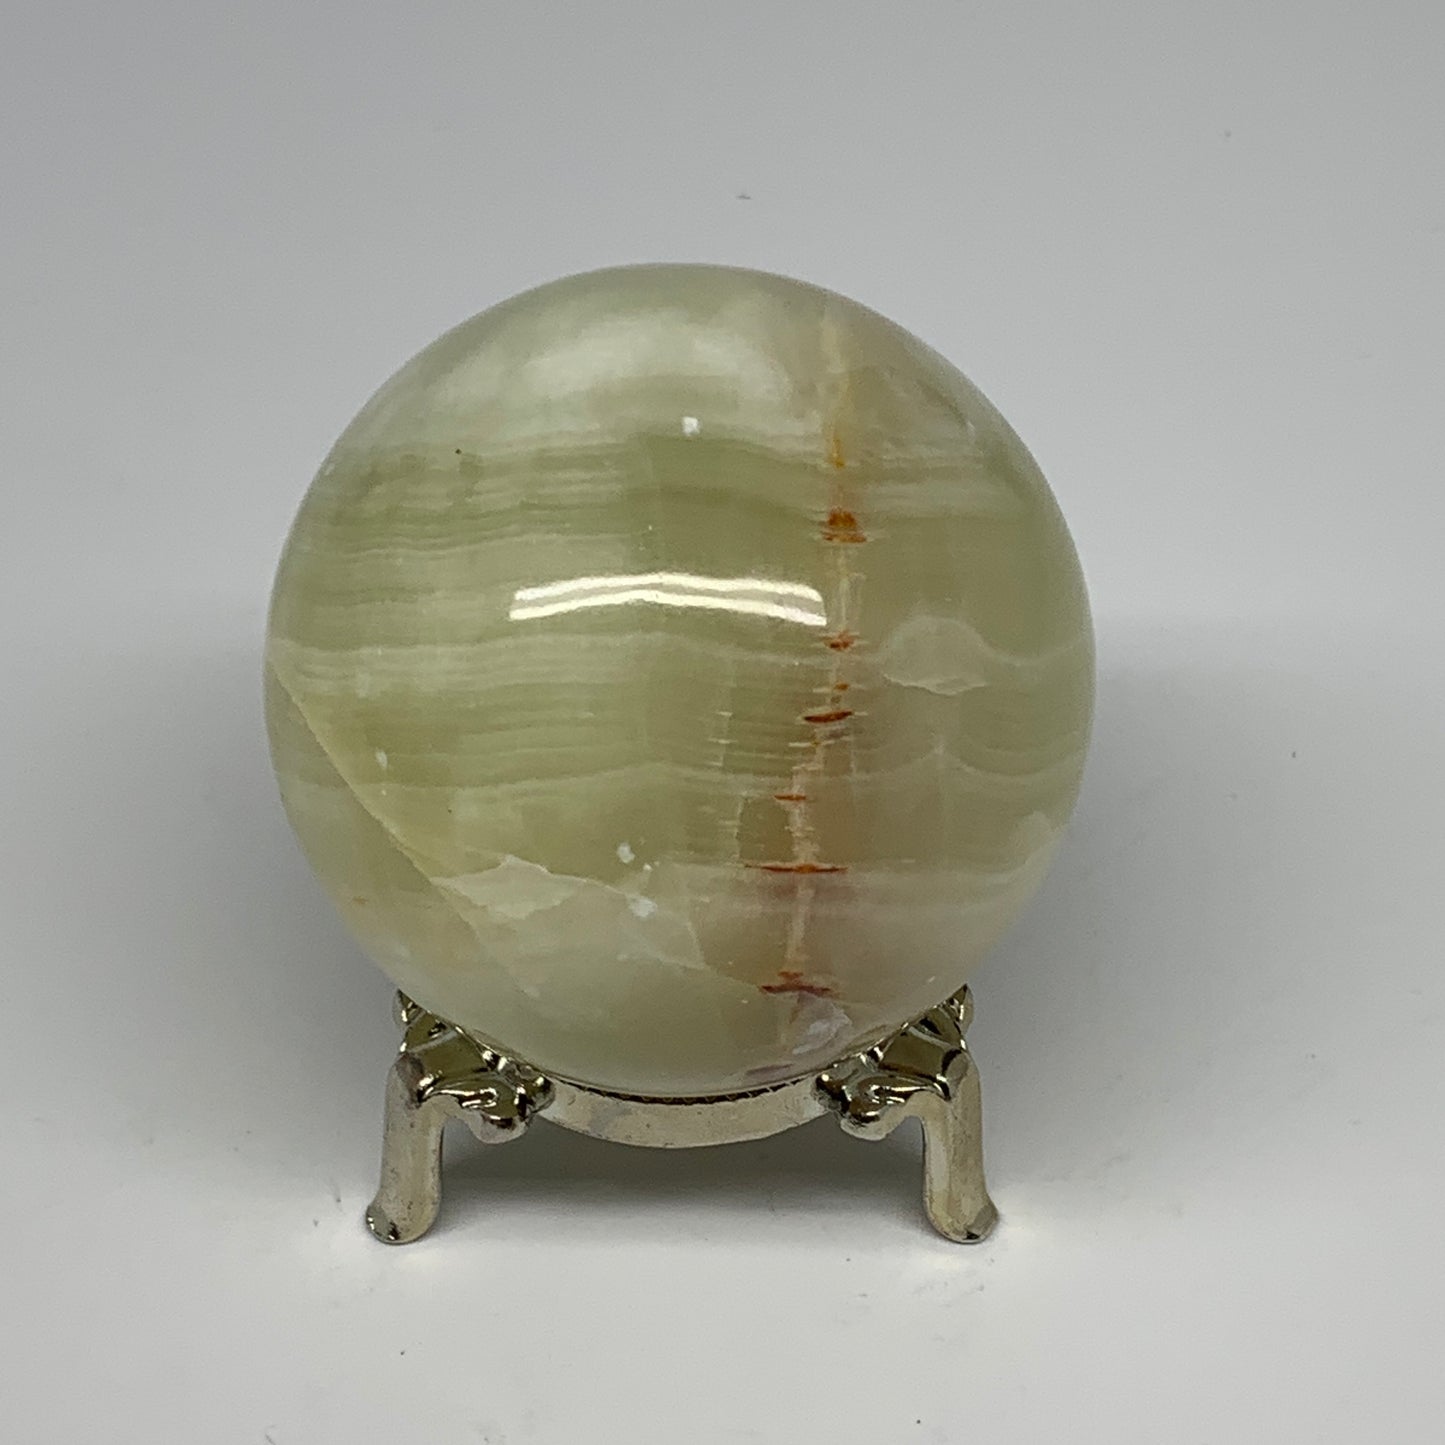 429.6g, 2.6" (67mm), Large Green Onyx Sphere Ball Gemstone @Afghanistan, B25433